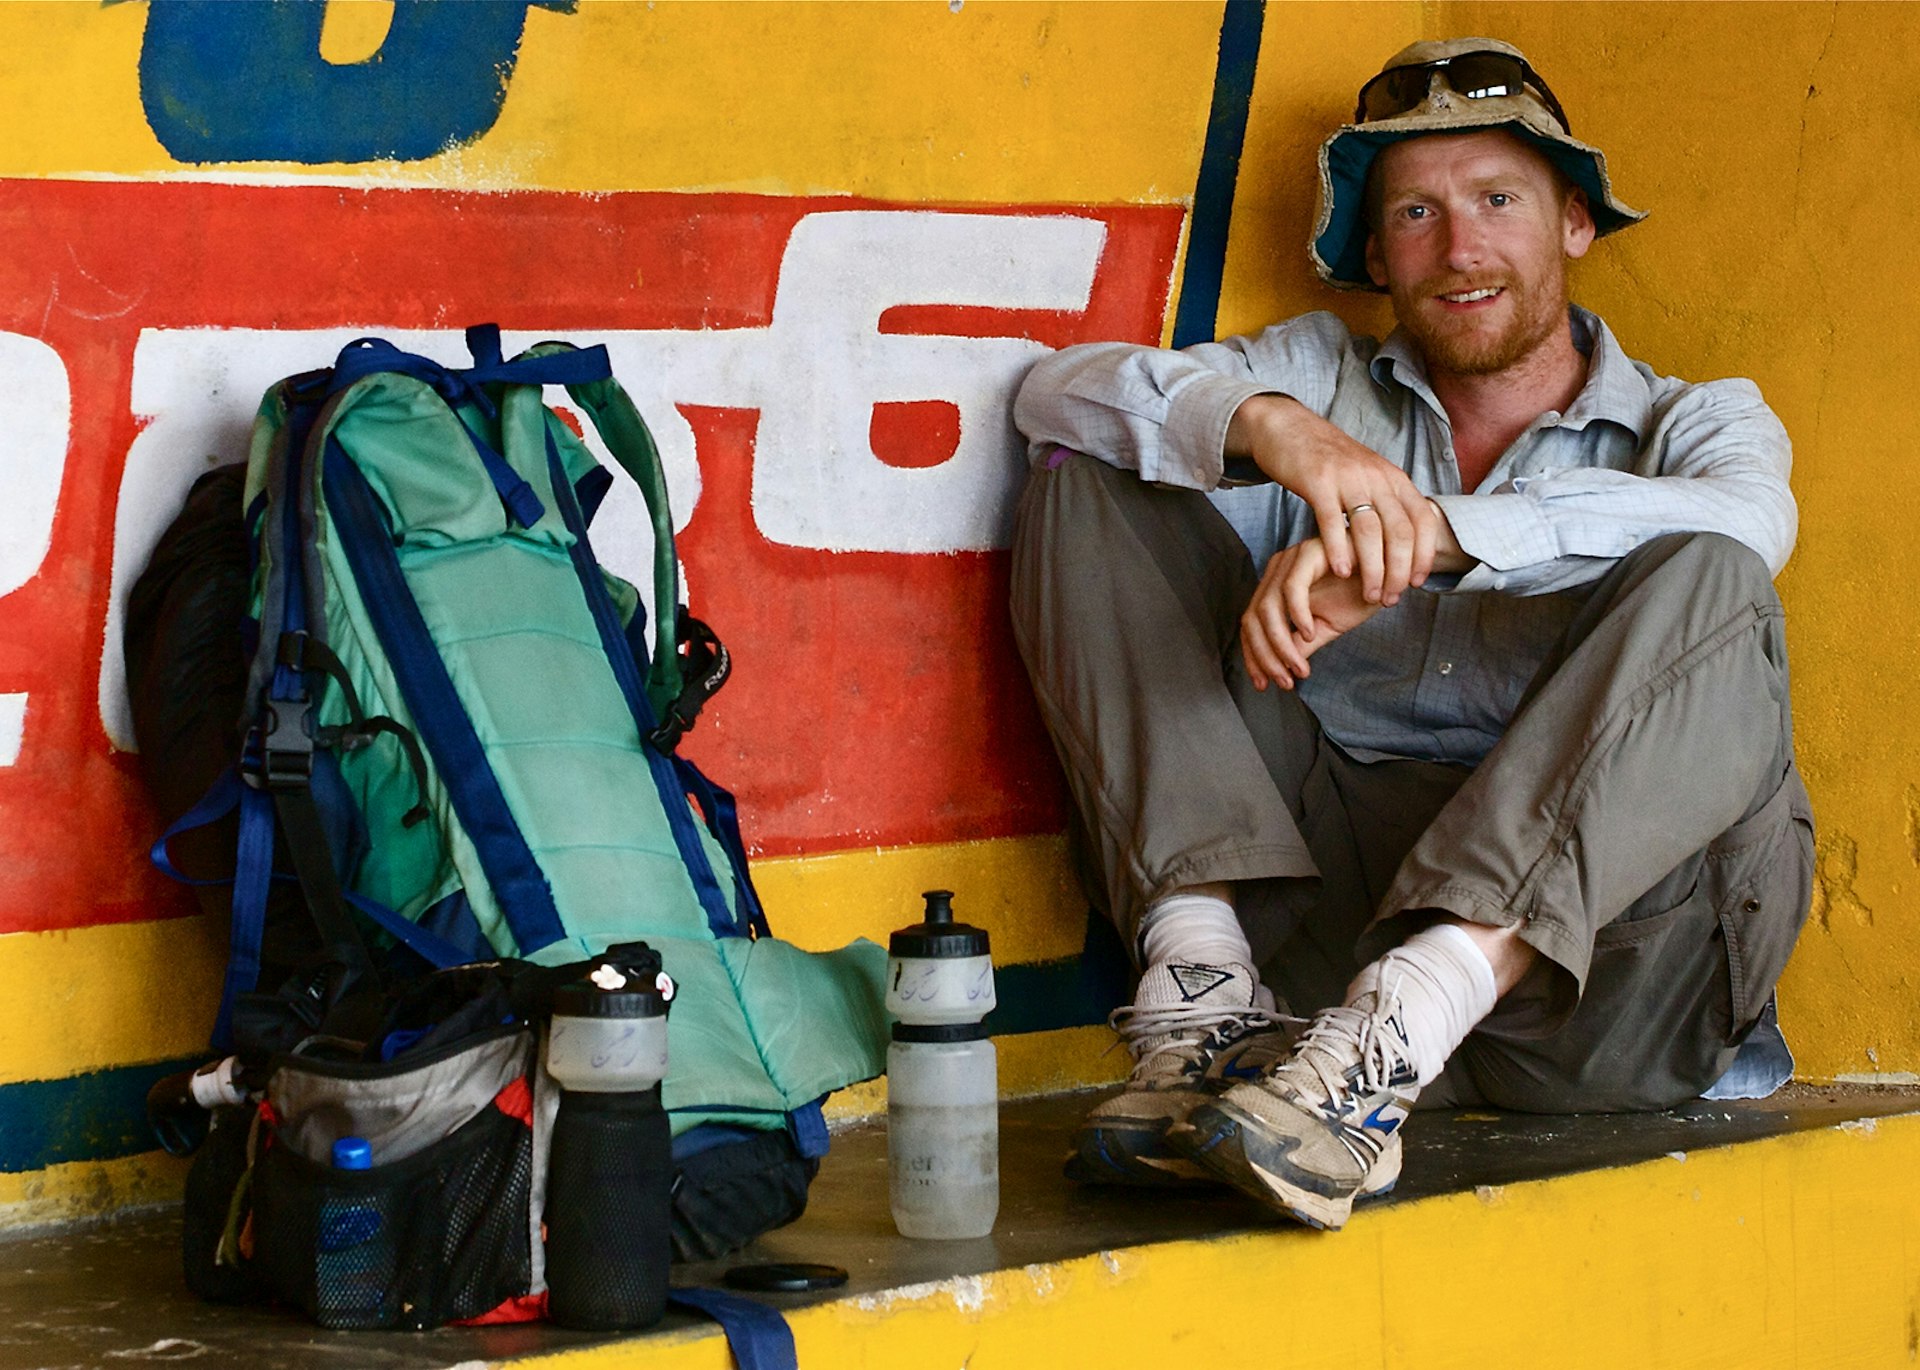 Alastair Humphreys taking a break during his trip across India on foot © Alastair Humphreys